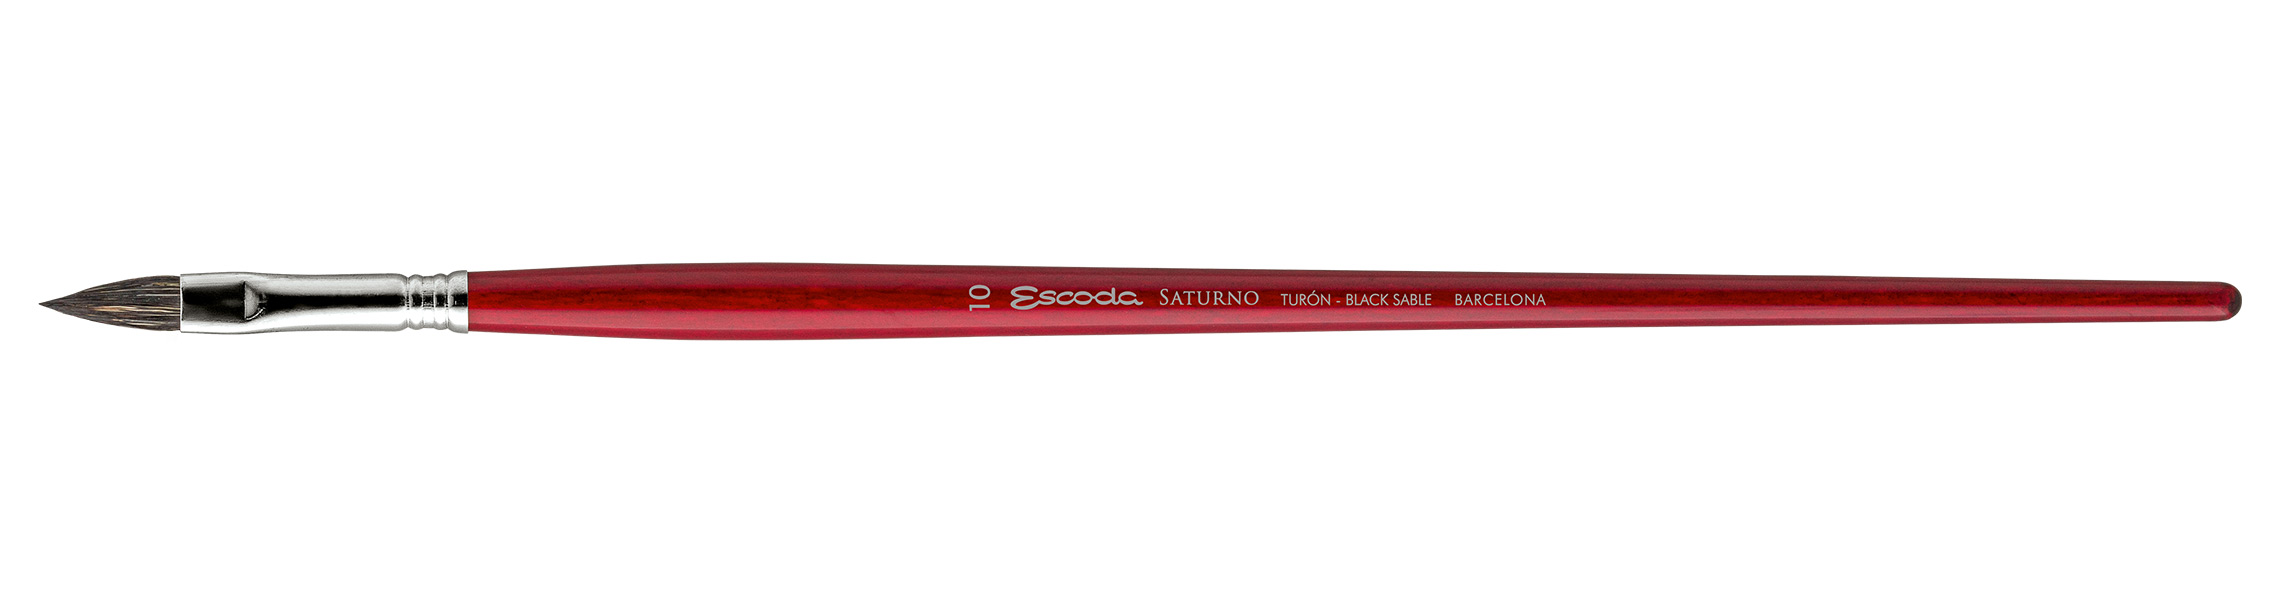 Escoda brushes serie 3724